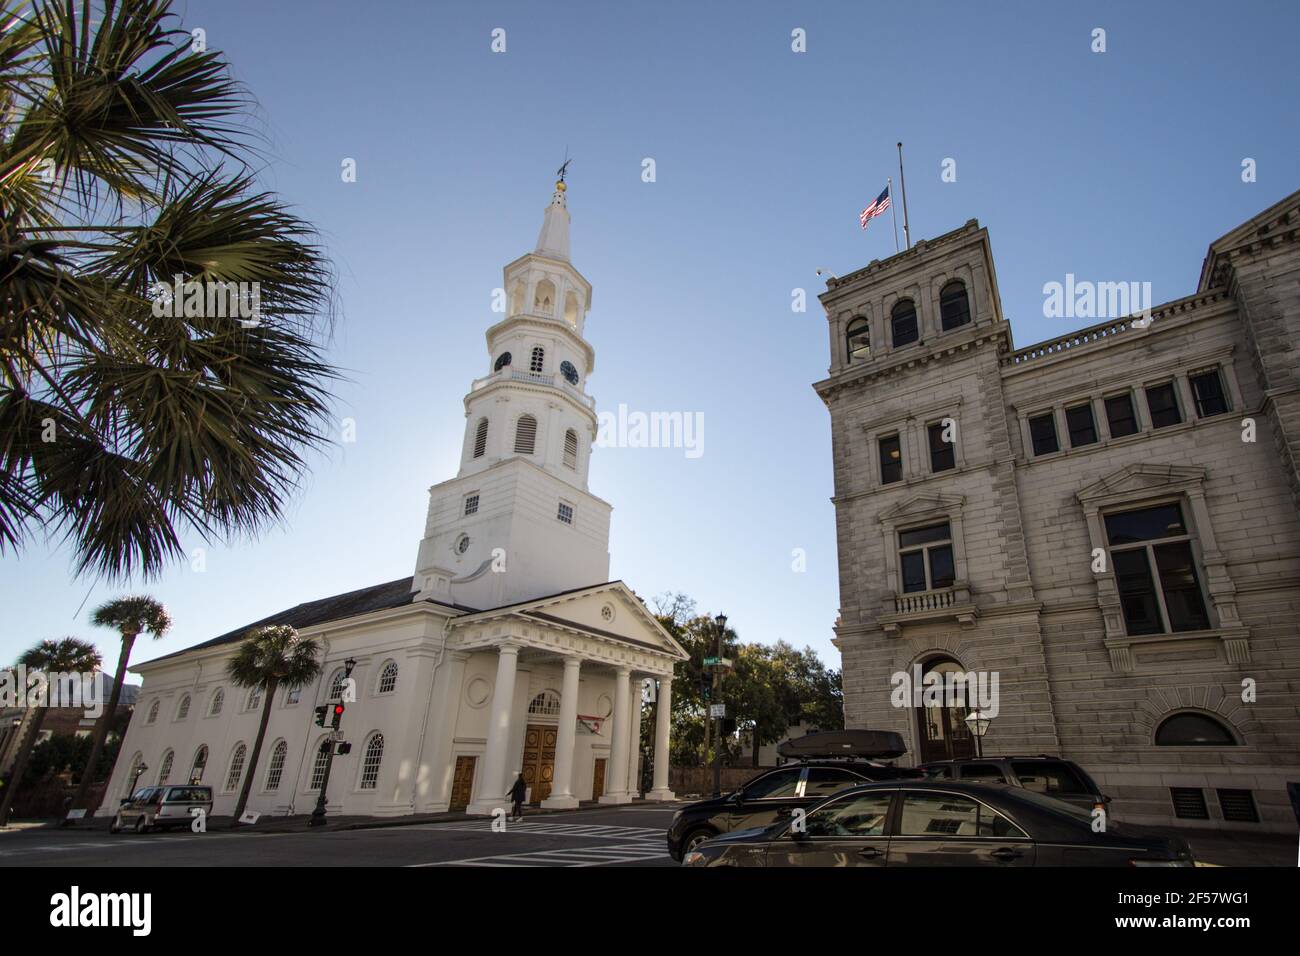 Charleston, South Carolina, USA - 23. Februar 2021: Die berühmten vier Rechtsecken in Charleston, South Carolina. Stockfoto